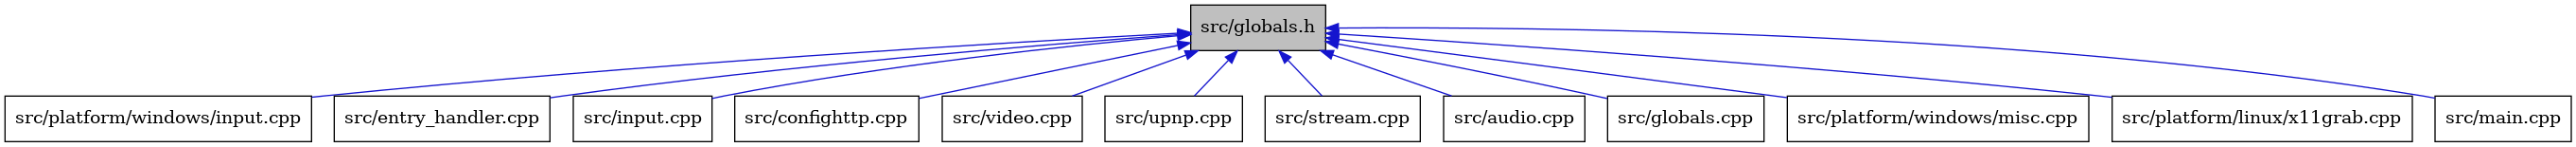 digraph {
    graph [bgcolor="#00000000"]
    node [shape=rectangle style=filled fillcolor="#FFFFFF" font=Helvetica padding=2]
    edge [color="#1414CE"]
    "1" [label="src/globals.h" tooltip="src/globals.h" fillcolor="#BFBFBF"]
    "9" [label="src/platform/windows/input.cpp" tooltip="src/platform/windows/input.cpp"]
    "4" [label="src/entry_handler.cpp" tooltip="src/entry_handler.cpp"]
    "6" [label="src/input.cpp" tooltip="src/input.cpp"]
    "3" [label="src/confighttp.cpp" tooltip="src/confighttp.cpp"]
    "13" [label="src/video.cpp" tooltip="src/video.cpp"]
    "12" [label="src/upnp.cpp" tooltip="src/upnp.cpp"]
    "11" [label="src/stream.cpp" tooltip="src/stream.cpp"]
    "2" [label="src/audio.cpp" tooltip="src/audio.cpp"]
    "5" [label="src/globals.cpp" tooltip="src/globals.cpp"]
    "10" [label="src/platform/windows/misc.cpp" tooltip="src/platform/windows/misc.cpp"]
    "8" [label="src/platform/linux/x11grab.cpp" tooltip="src/platform/linux/x11grab.cpp"]
    "7" [label="src/main.cpp" tooltip="src/main.cpp"]
    "1" -> "2" [dir=back tooltip="include"]
    "1" -> "3" [dir=back tooltip="include"]
    "1" -> "4" [dir=back tooltip="include"]
    "1" -> "5" [dir=back tooltip="include"]
    "1" -> "6" [dir=back tooltip="include"]
    "1" -> "7" [dir=back tooltip="include"]
    "1" -> "8" [dir=back tooltip="include"]
    "1" -> "9" [dir=back tooltip="include"]
    "1" -> "10" [dir=back tooltip="include"]
    "1" -> "11" [dir=back tooltip="include"]
    "1" -> "12" [dir=back tooltip="include"]
    "1" -> "13" [dir=back tooltip="include"]
}